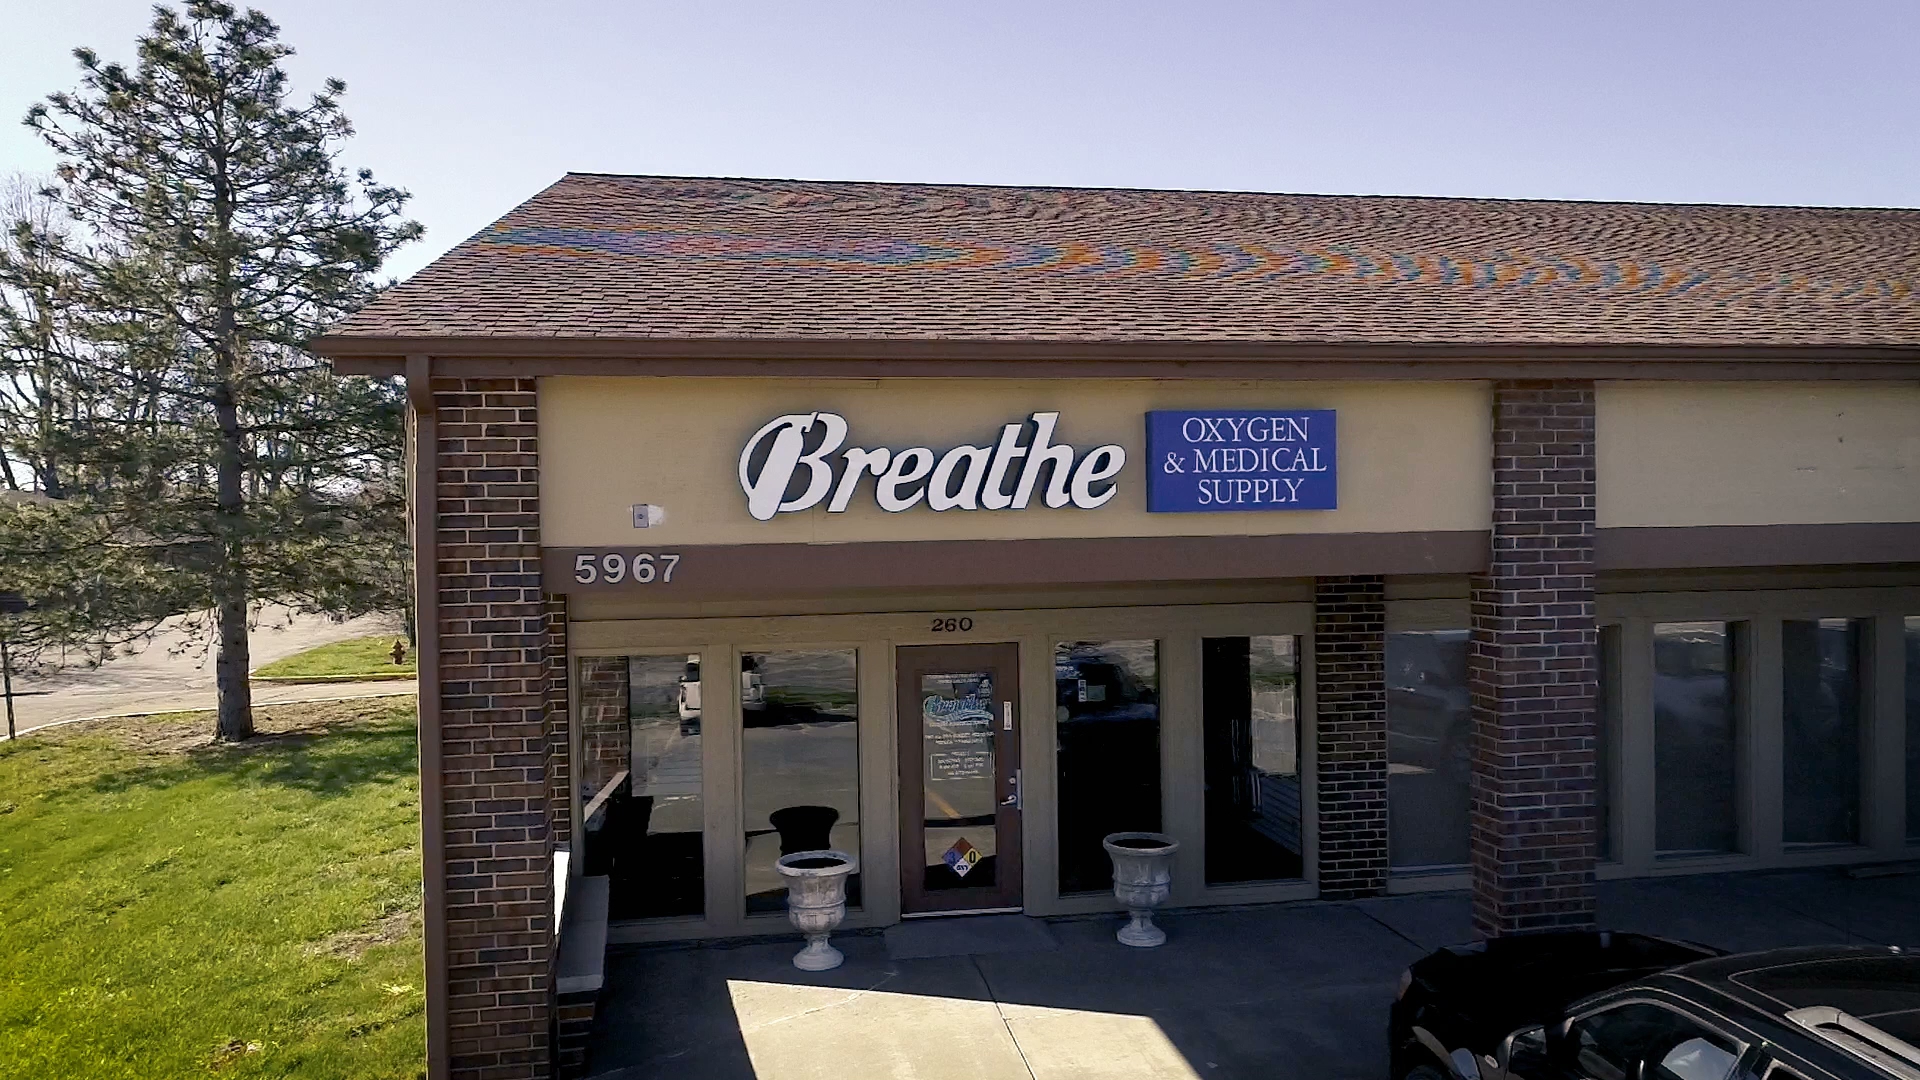 Breathe Oxygen & Medical Supply